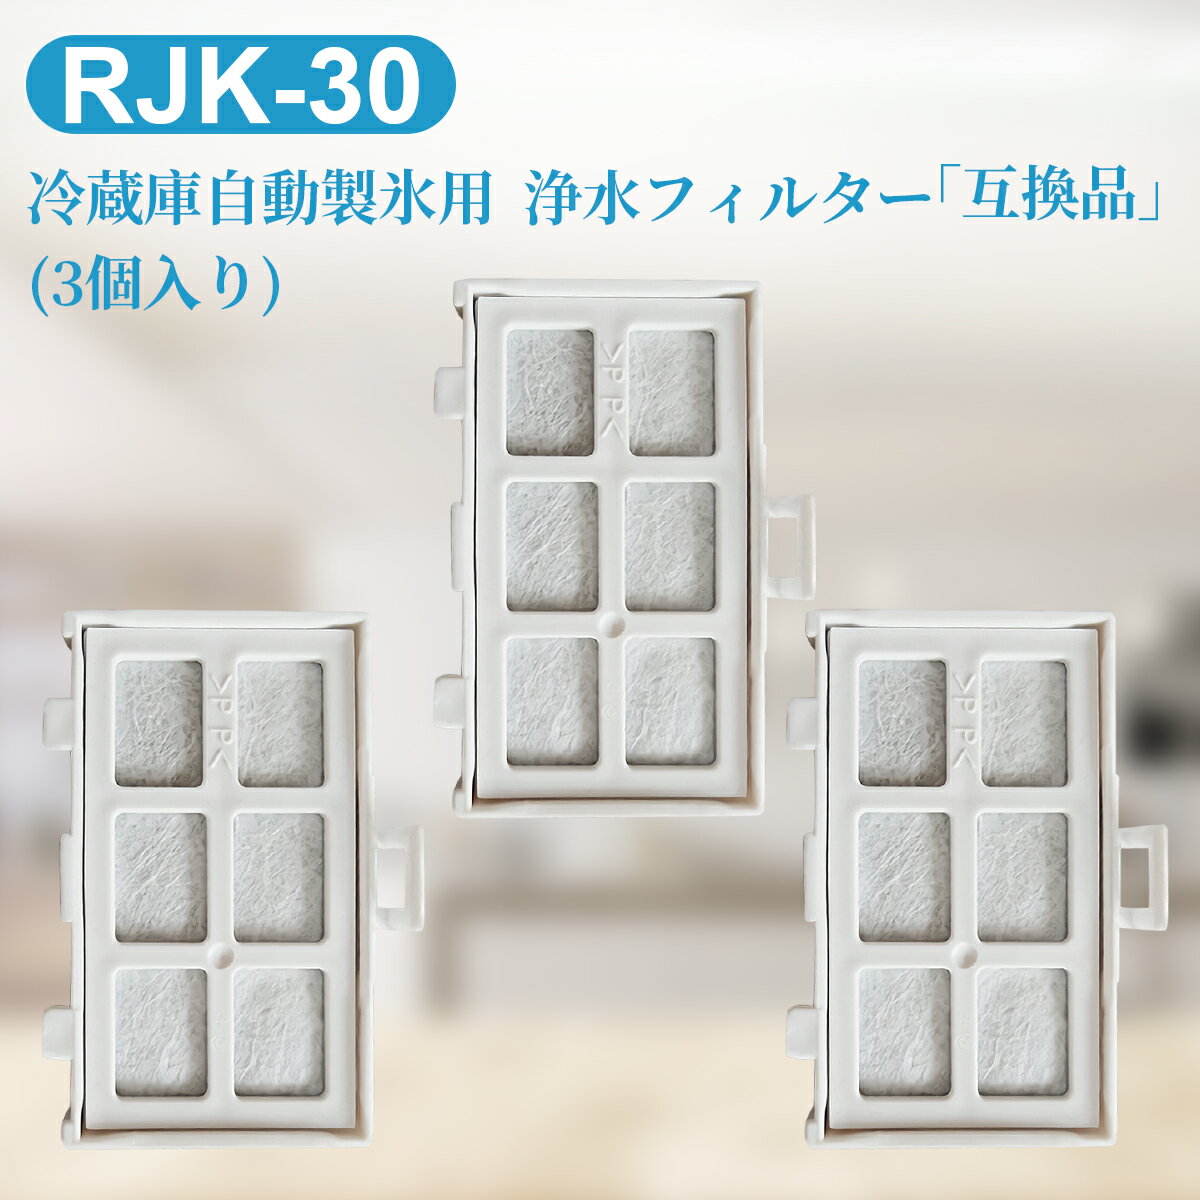 RJK-30-100 日立 冷蔵庫 浄水フィルタ